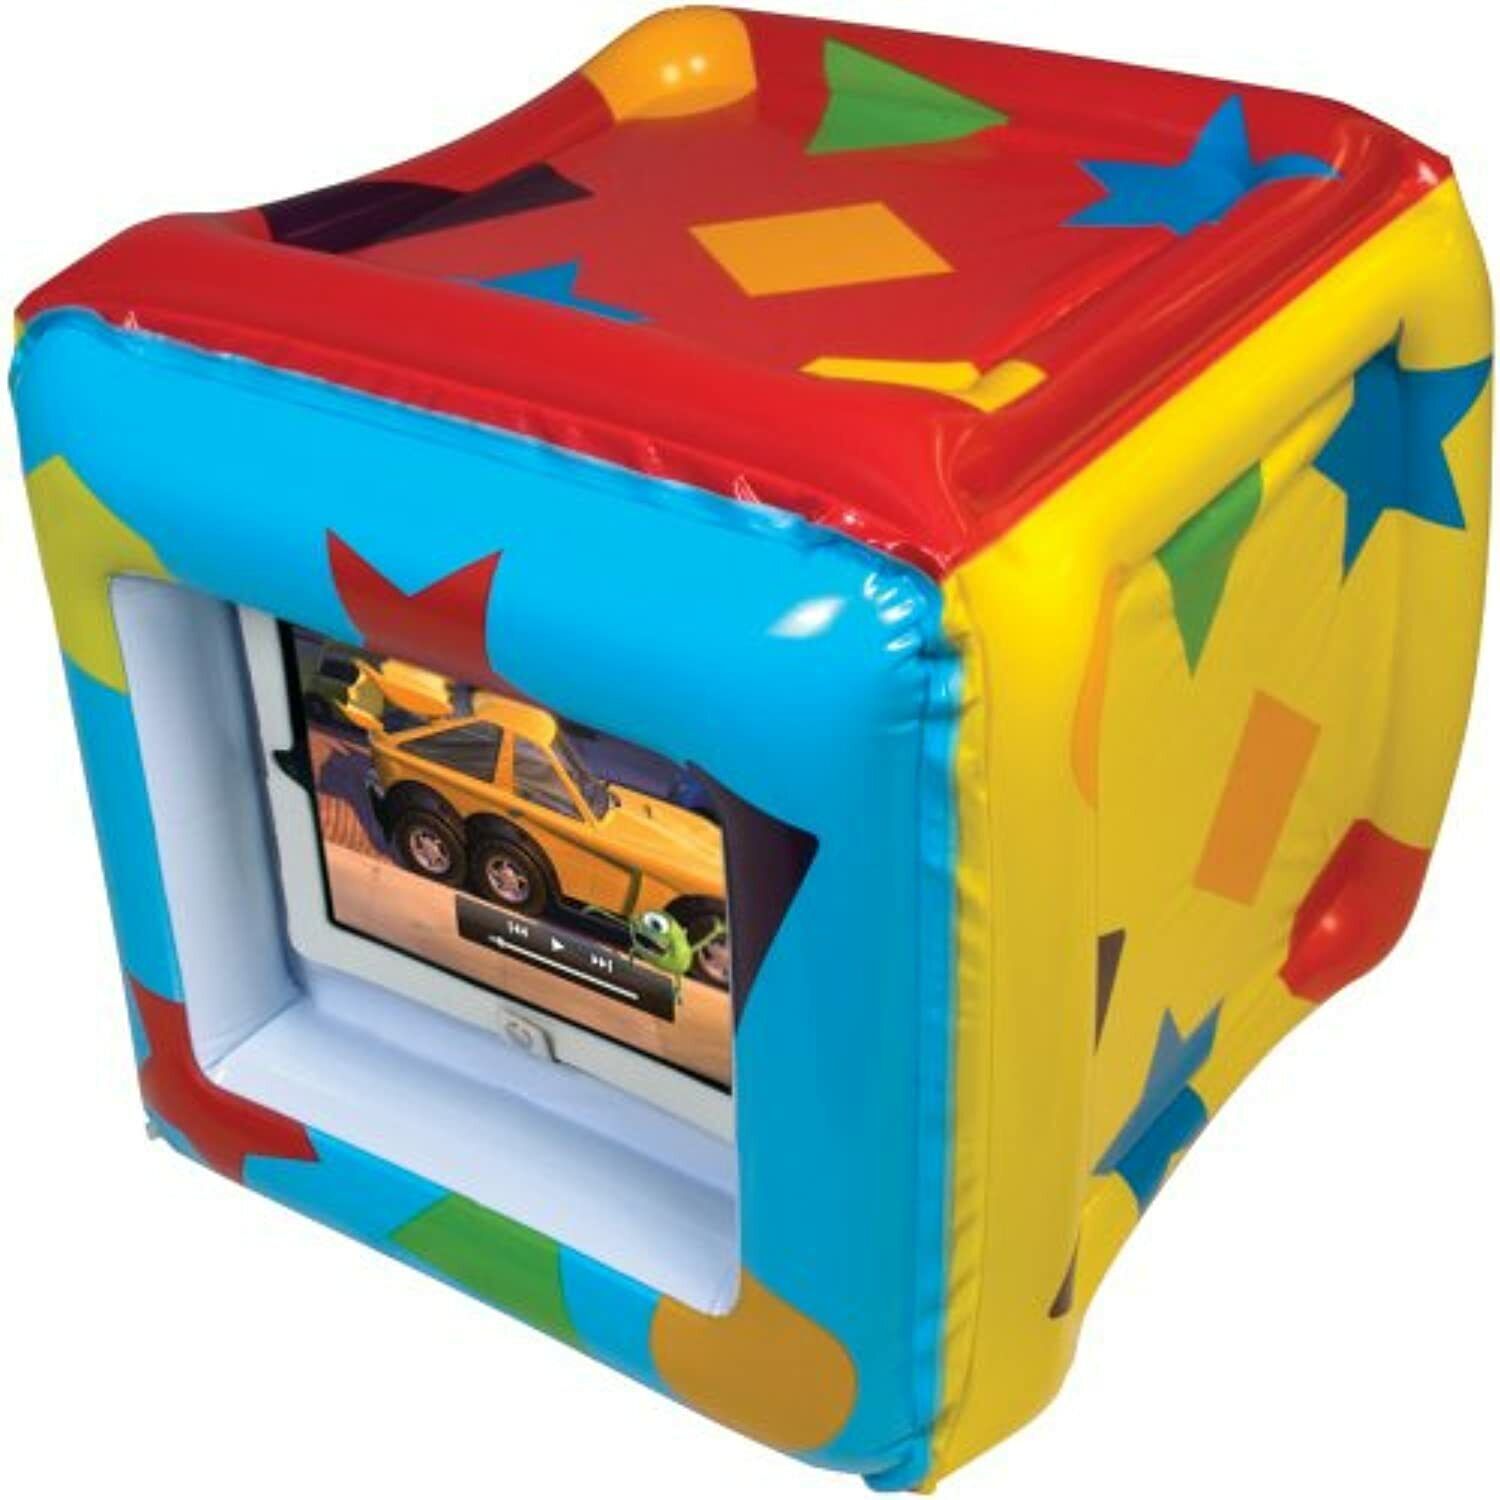 CTA Digital Inflatable Play Cube (PAD-CUBE) Compatible With Apple iPad & iPad 2